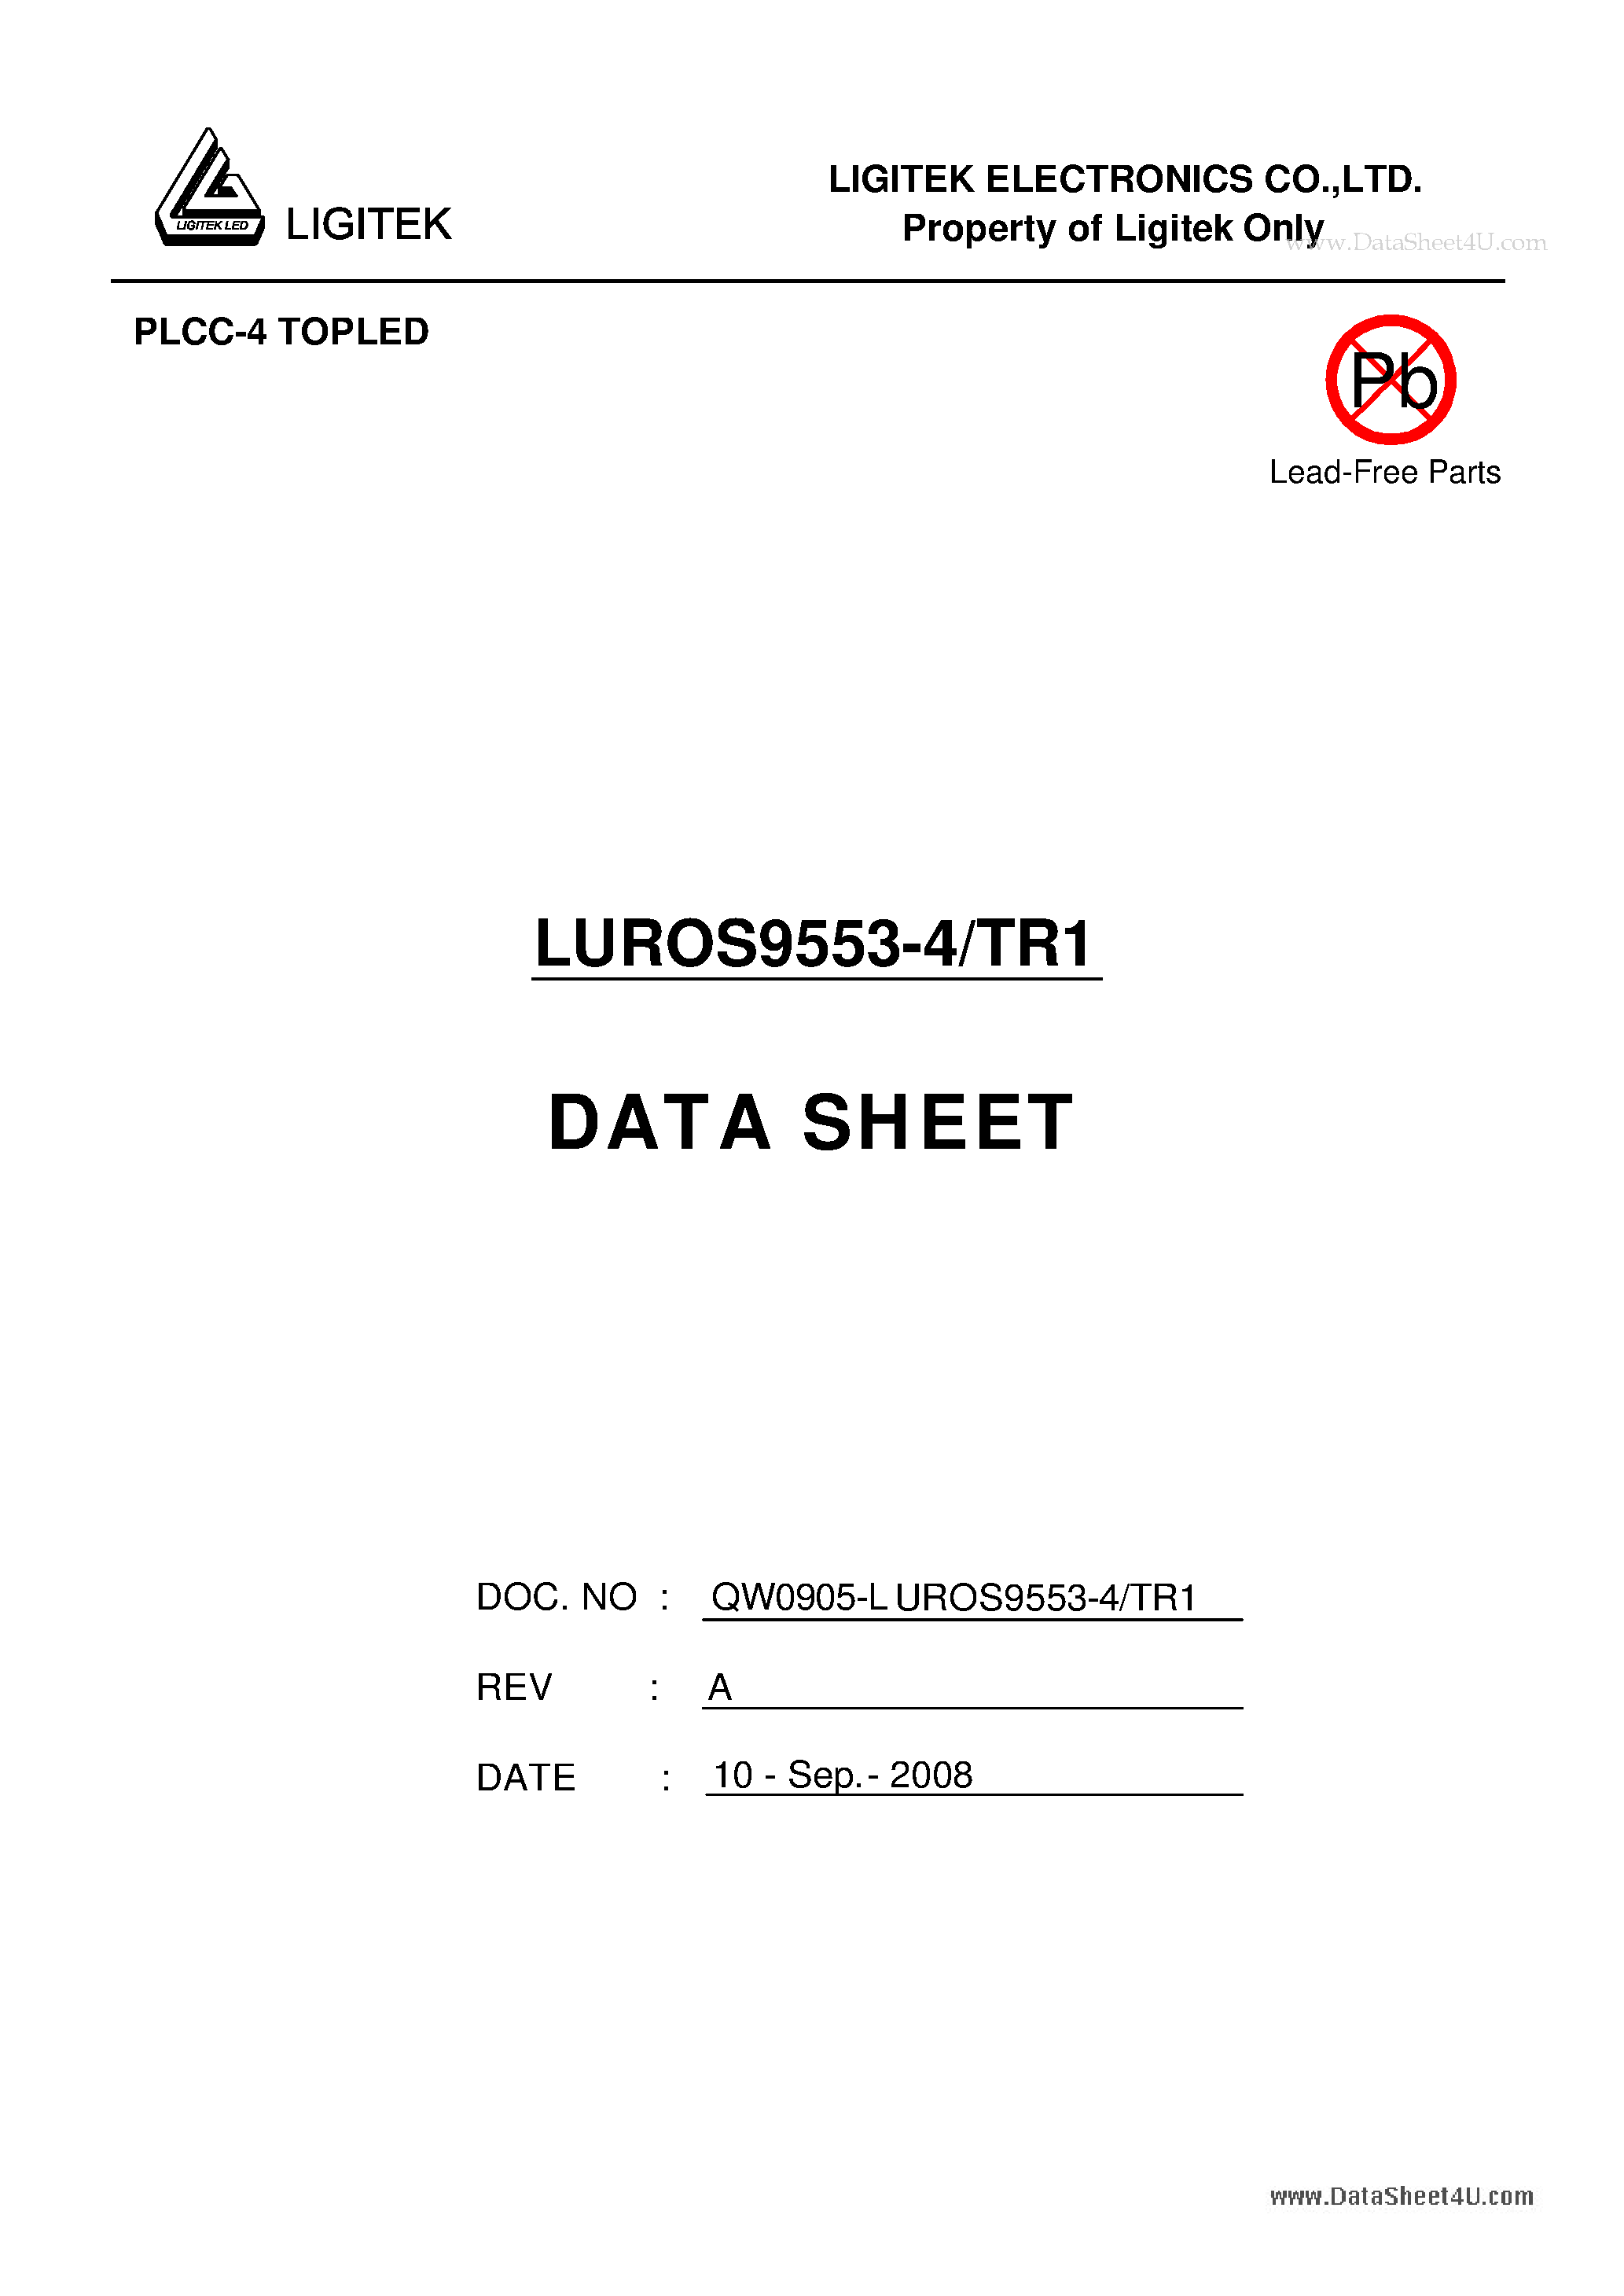 Datasheet LUROS9553-4-TR1 - PLCC-4 TOPLED page 1